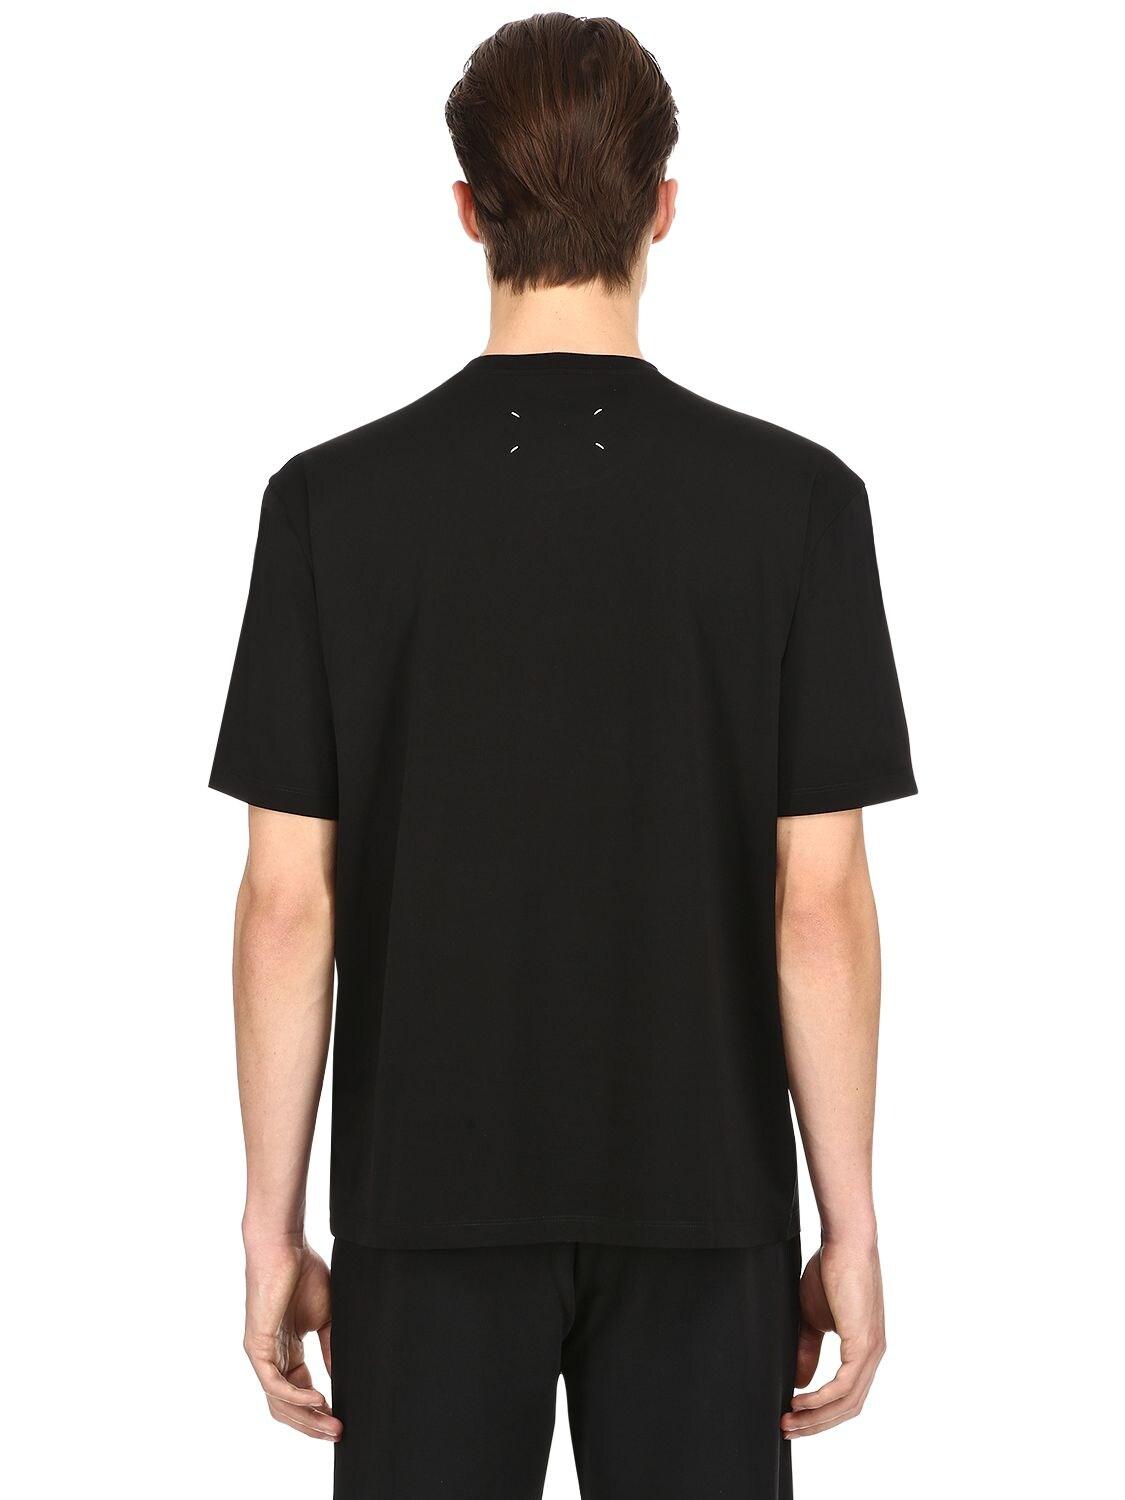 Maison Margiela Kiss Print Cotton Jersey T-shirt in Black for Men - Lyst